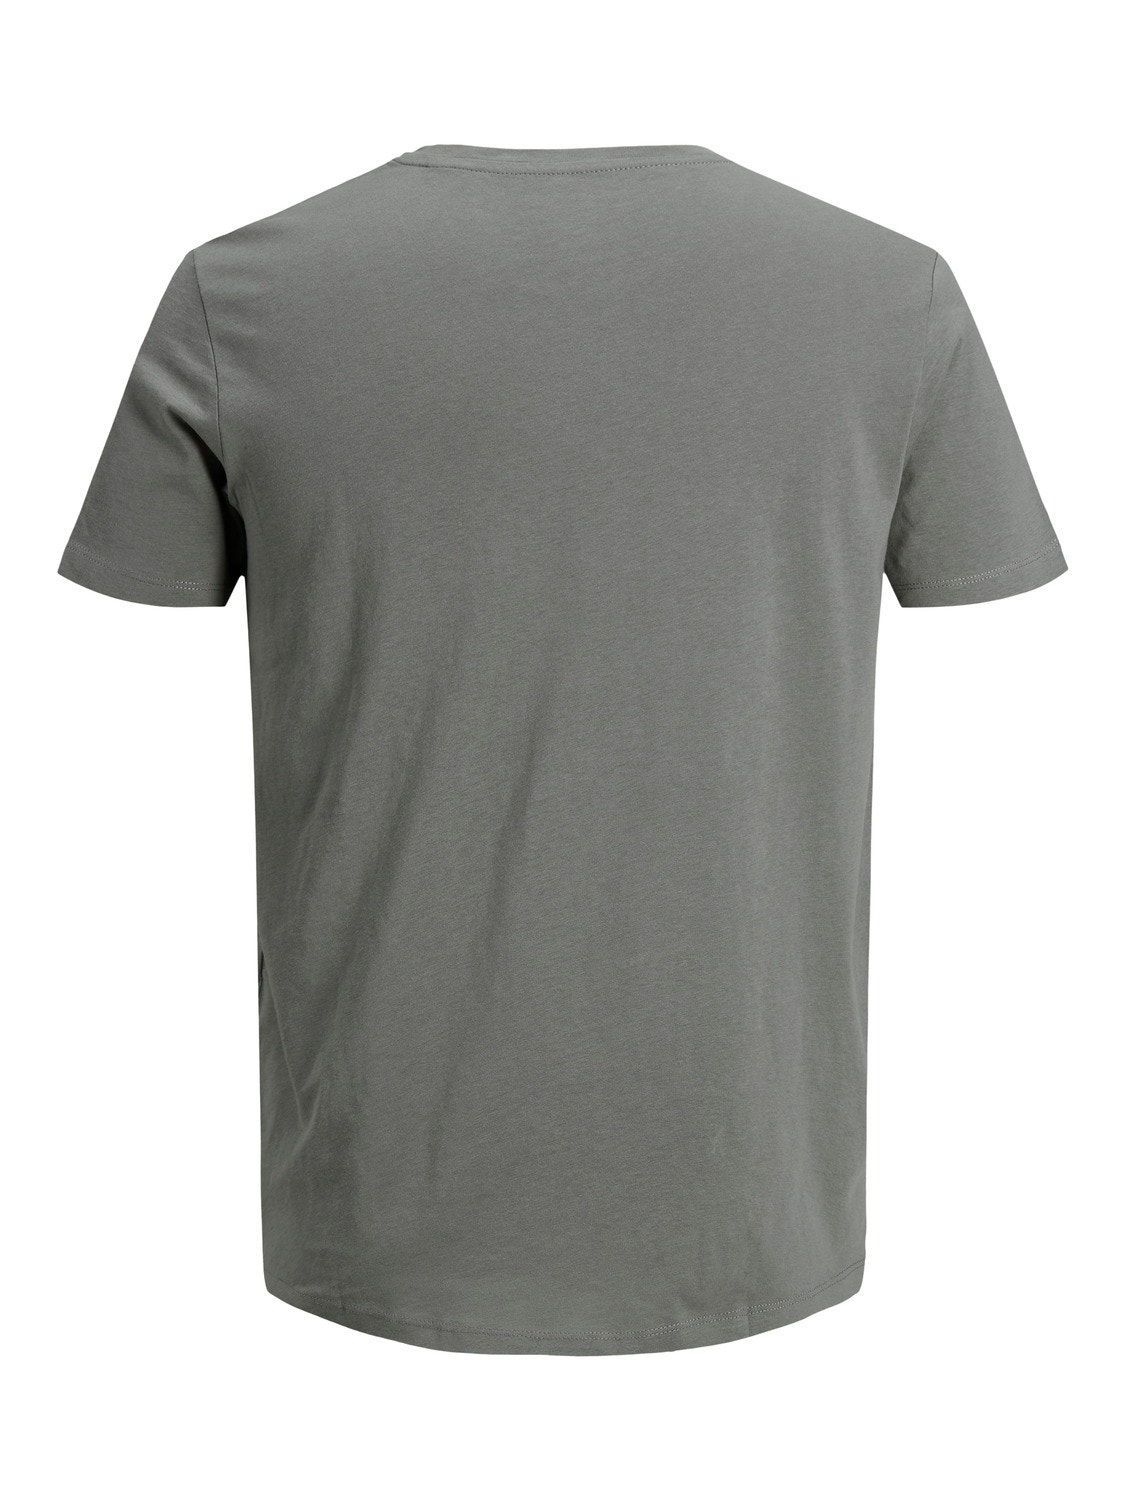 Jack & Jones Camiseta Liso Cuello redondo -Sedona Sage - 12113648